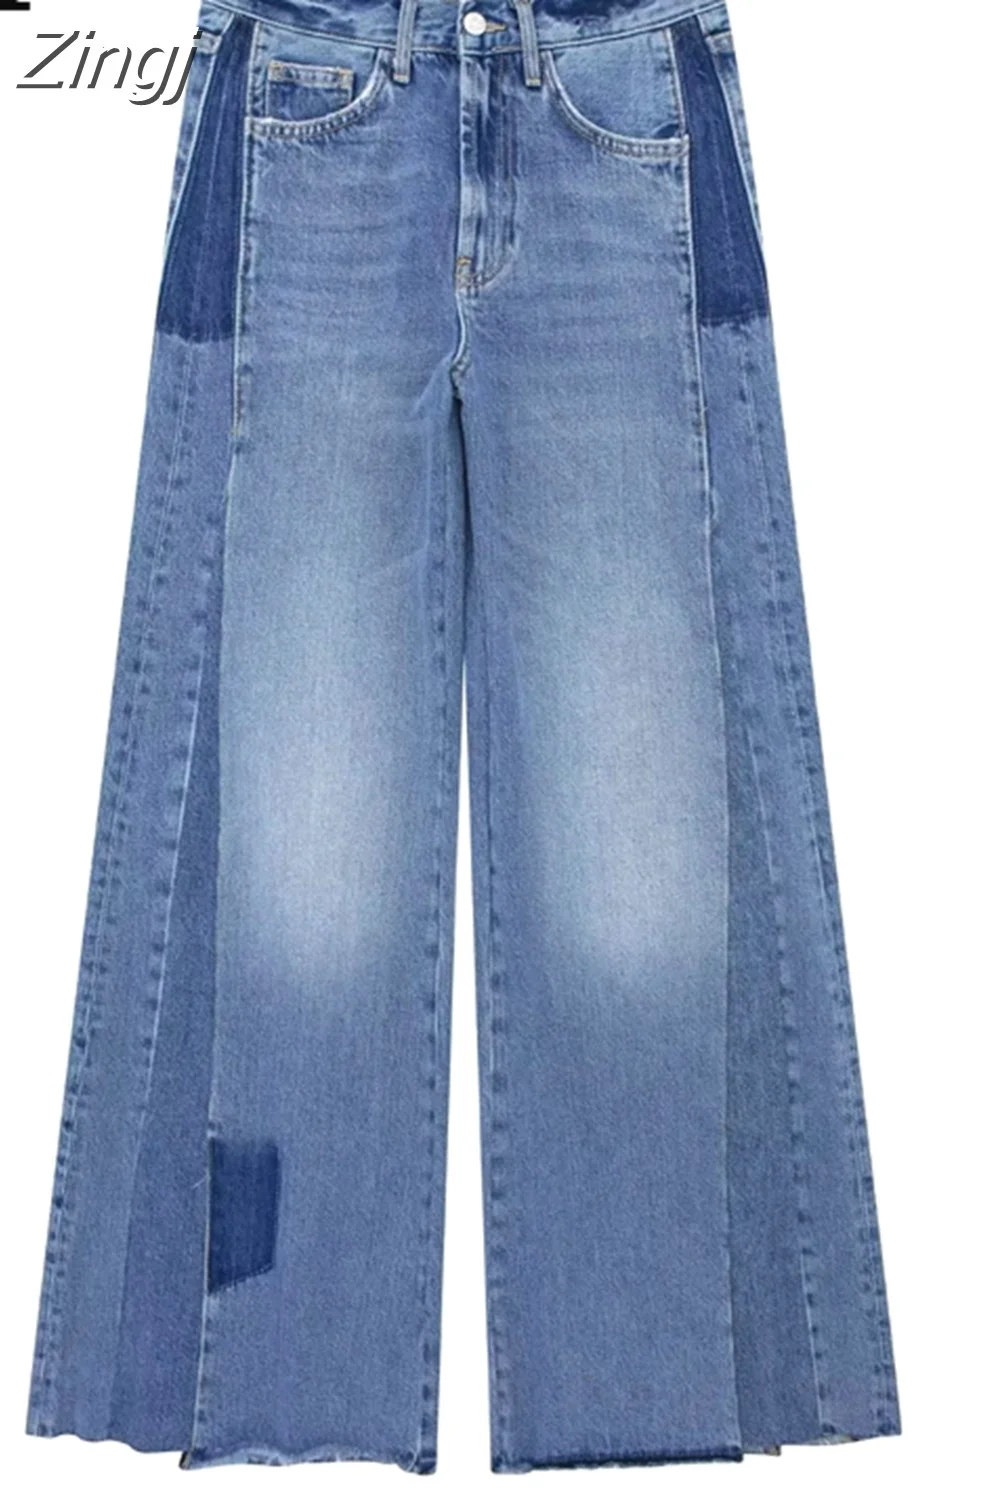 Zingj Blue Wide leg Jeans For Women Patchwork Denim Pants Woman Fashion Streetwear Baggy Pants Woman Mid-Waist Woman Trousers